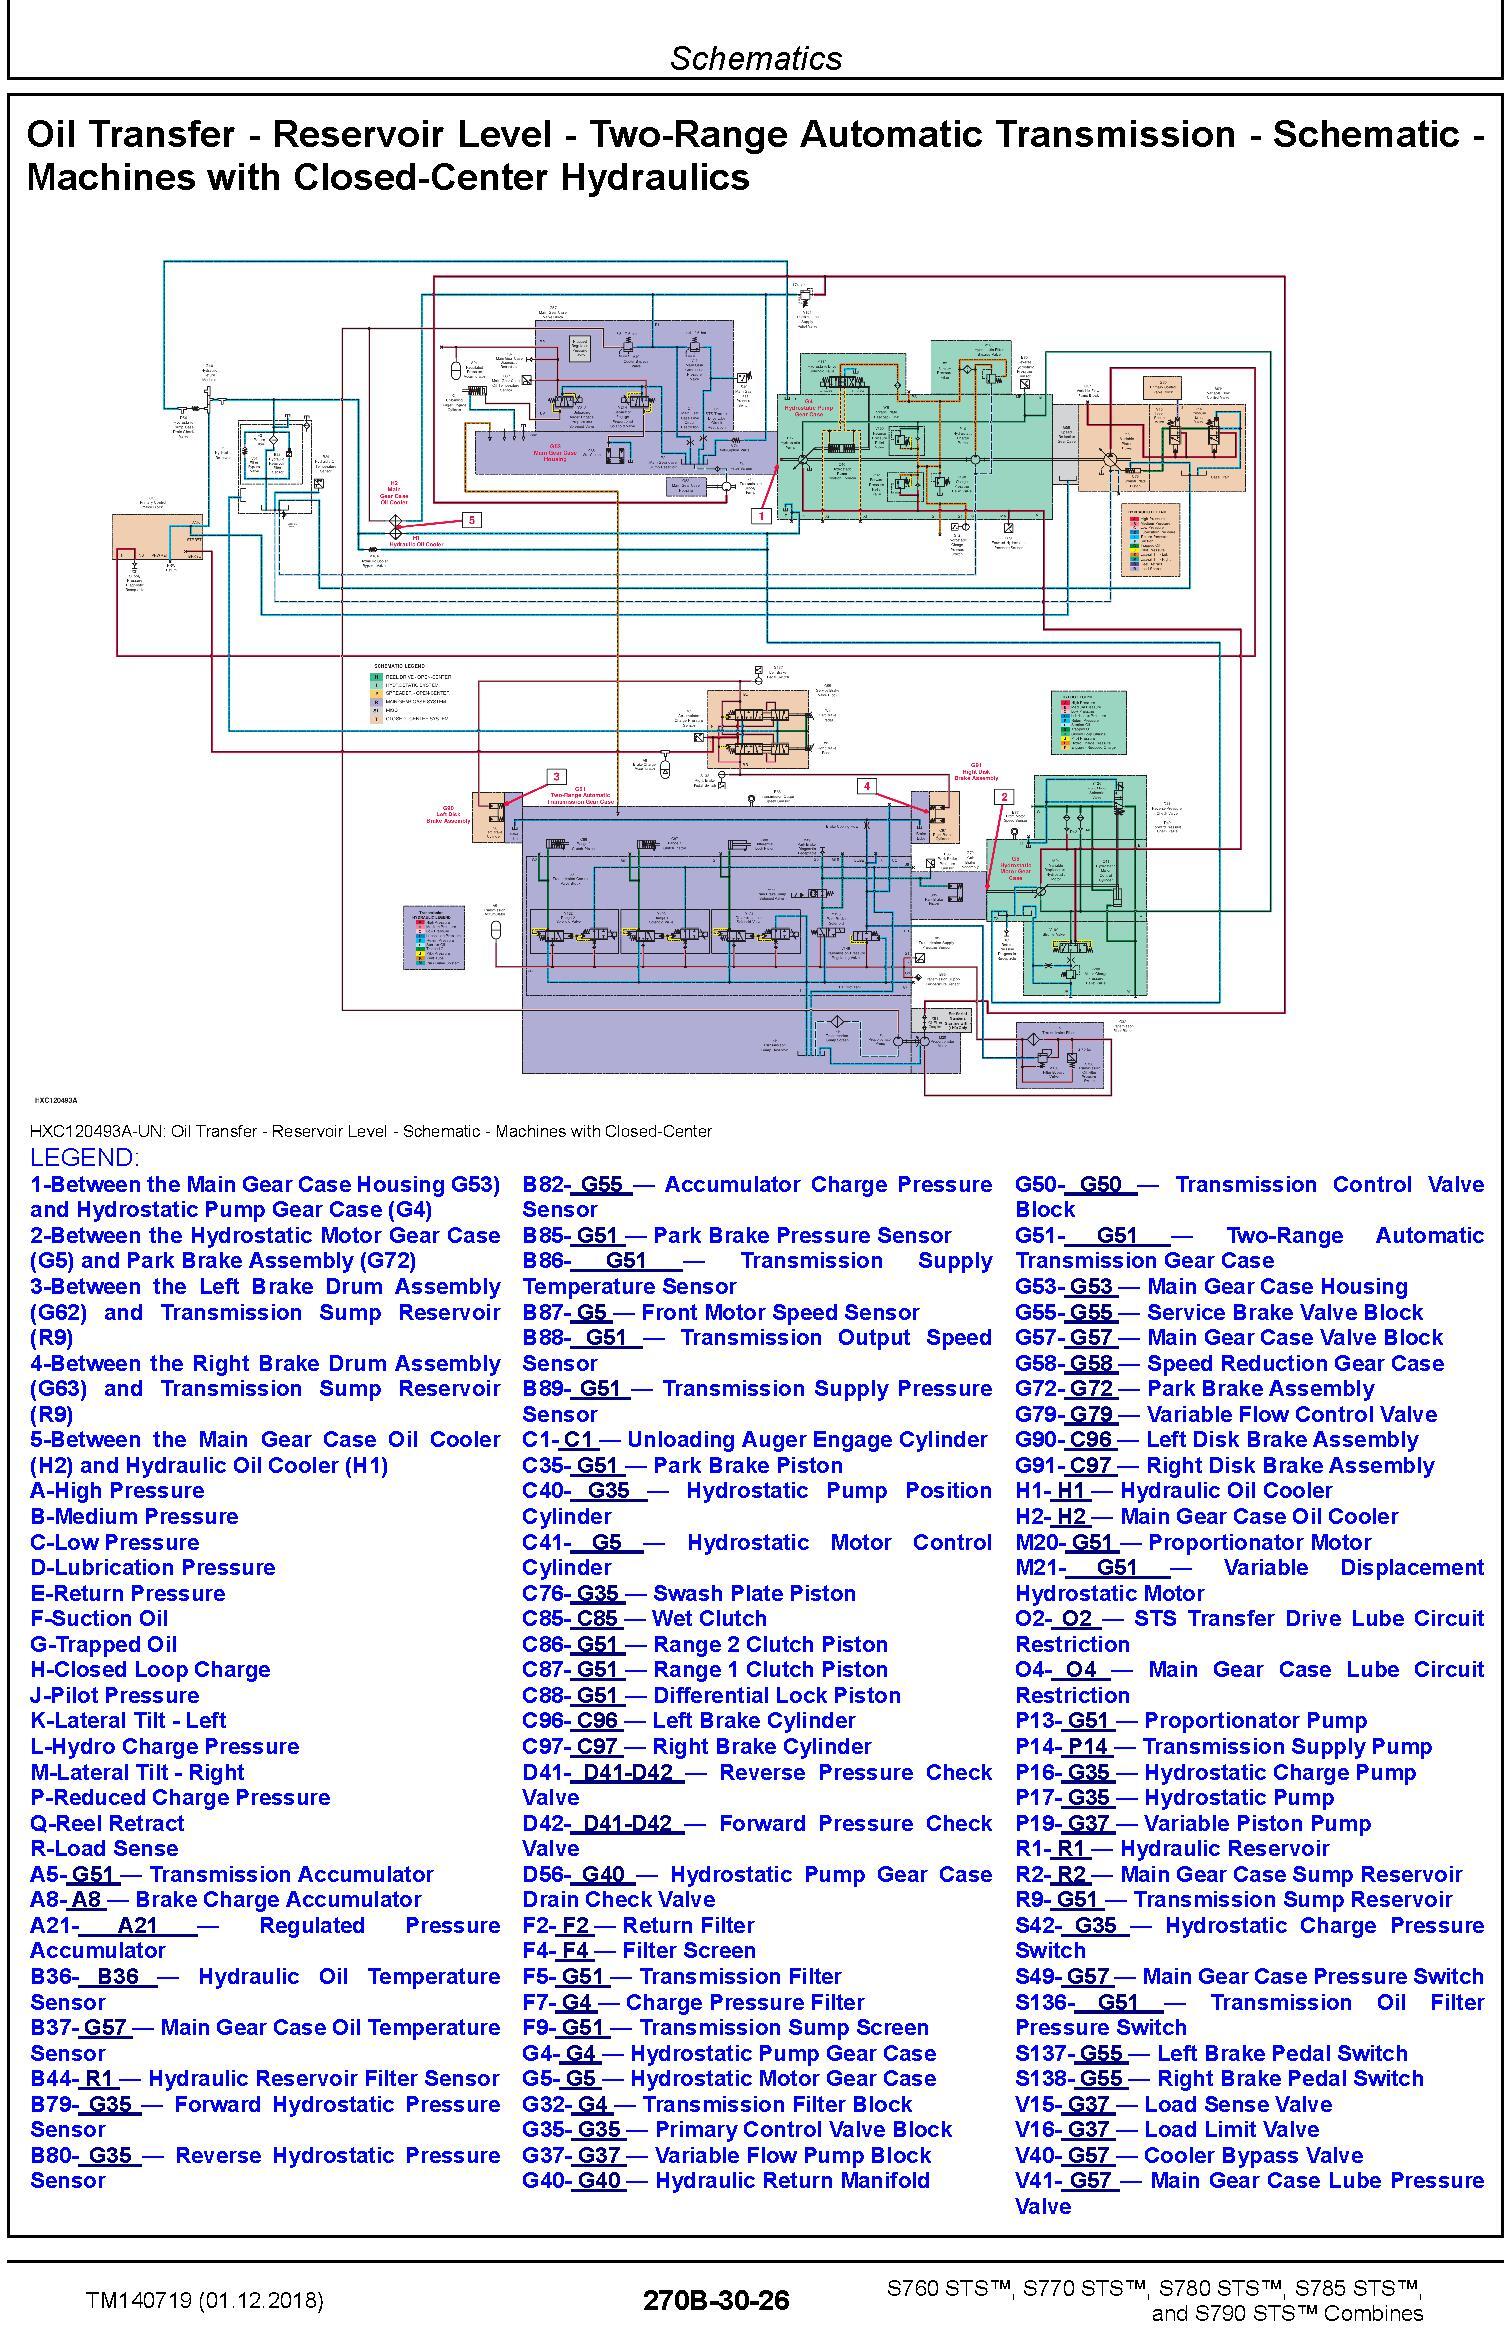 John Deere S760, S770, S780, S785, S790 STS Combines Diagnostic Technical Service Manual (TM140719) - 3